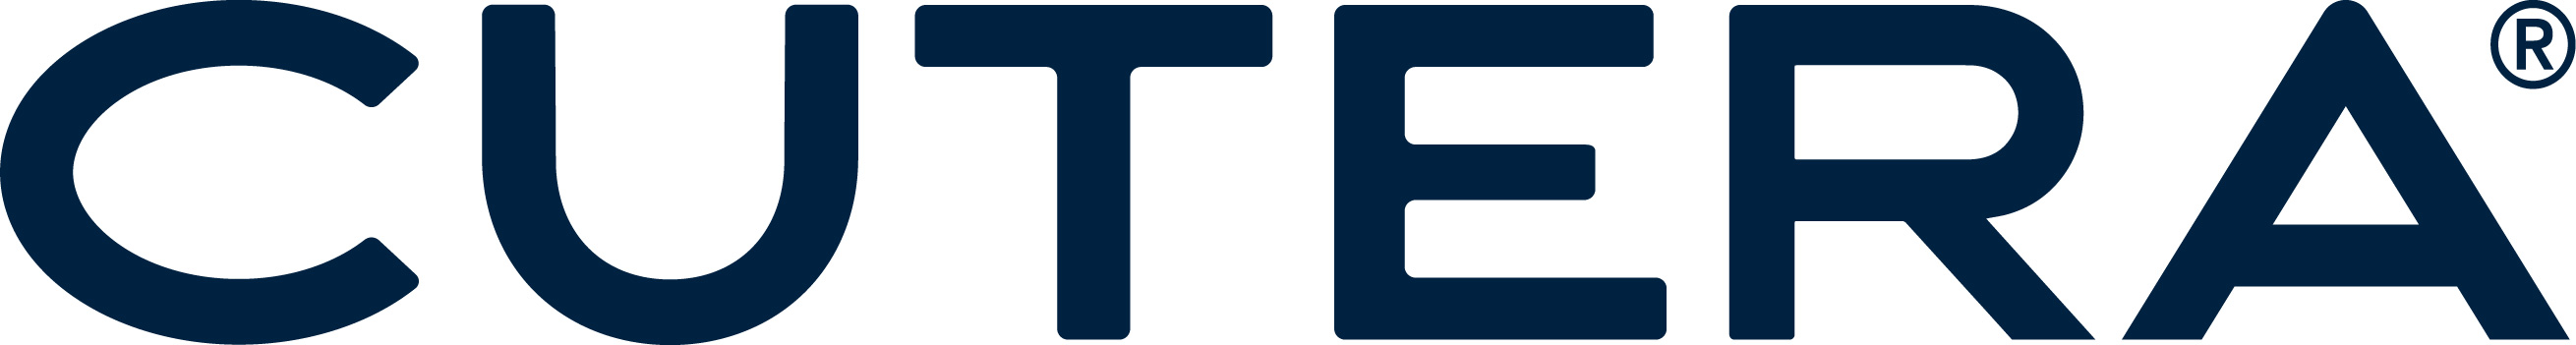 Cutera-Logo_RGB-Navy.jpg